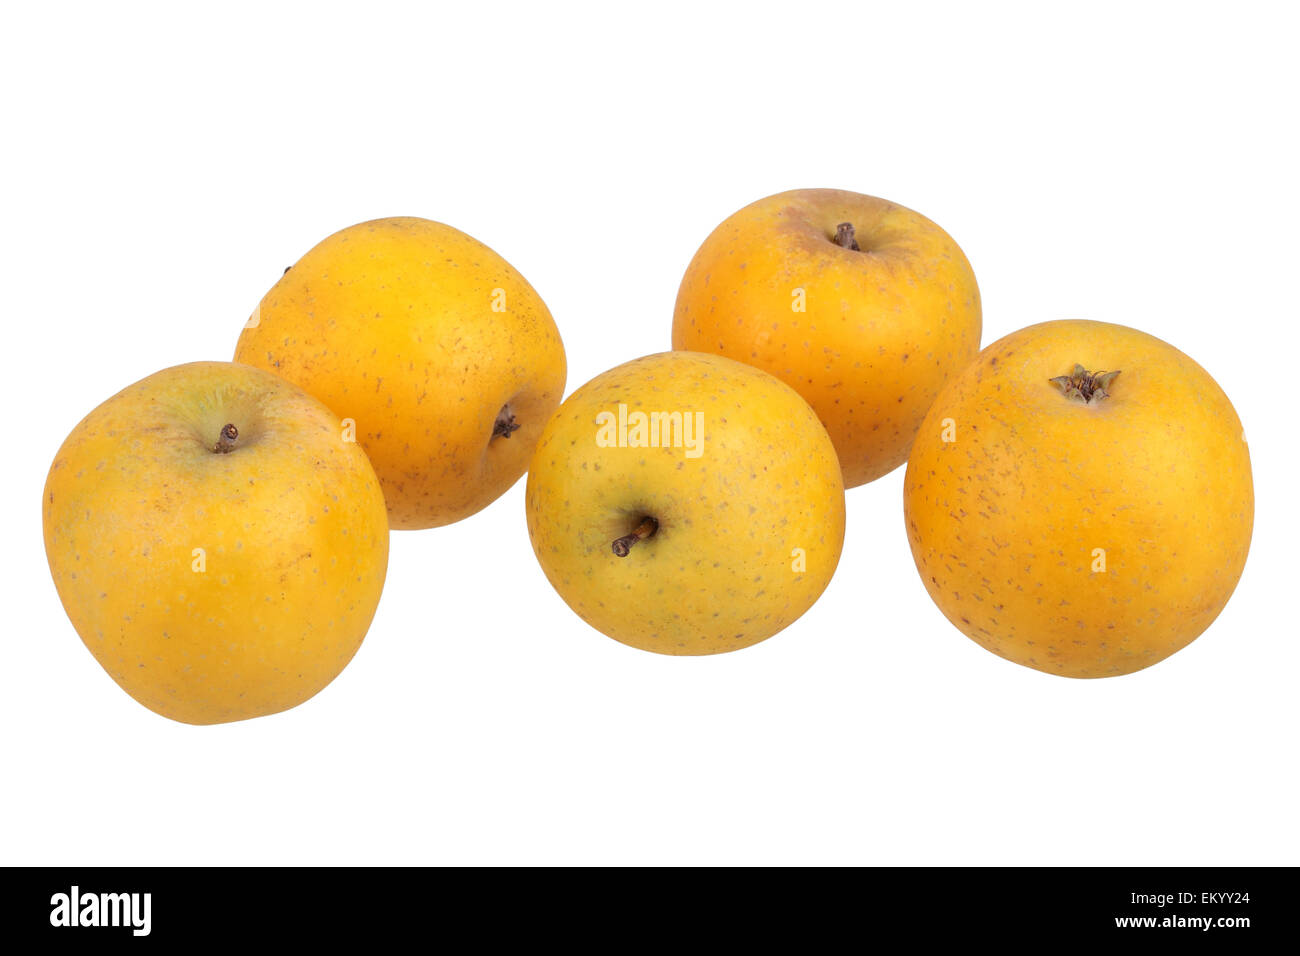 Apple variety Ananas Reinette Stock Photo